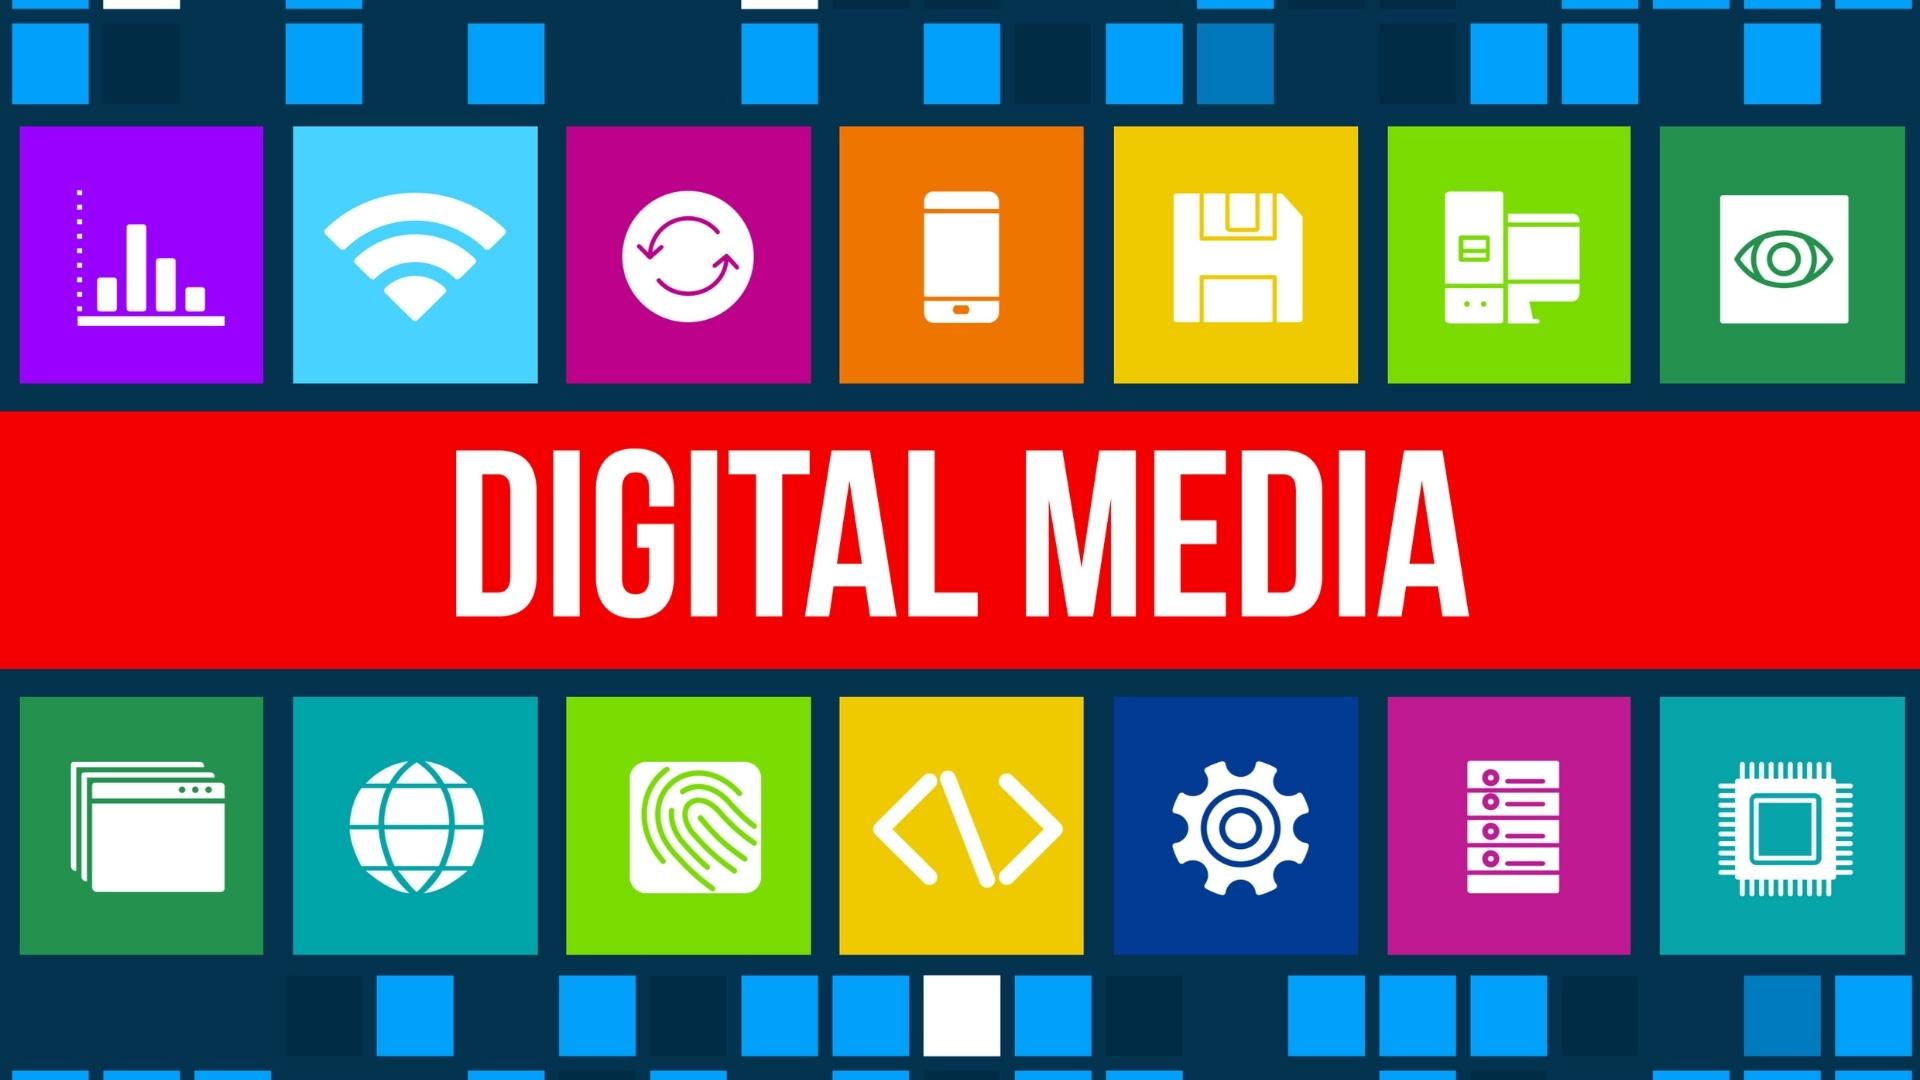 Online Associates in Digital Media - featured image